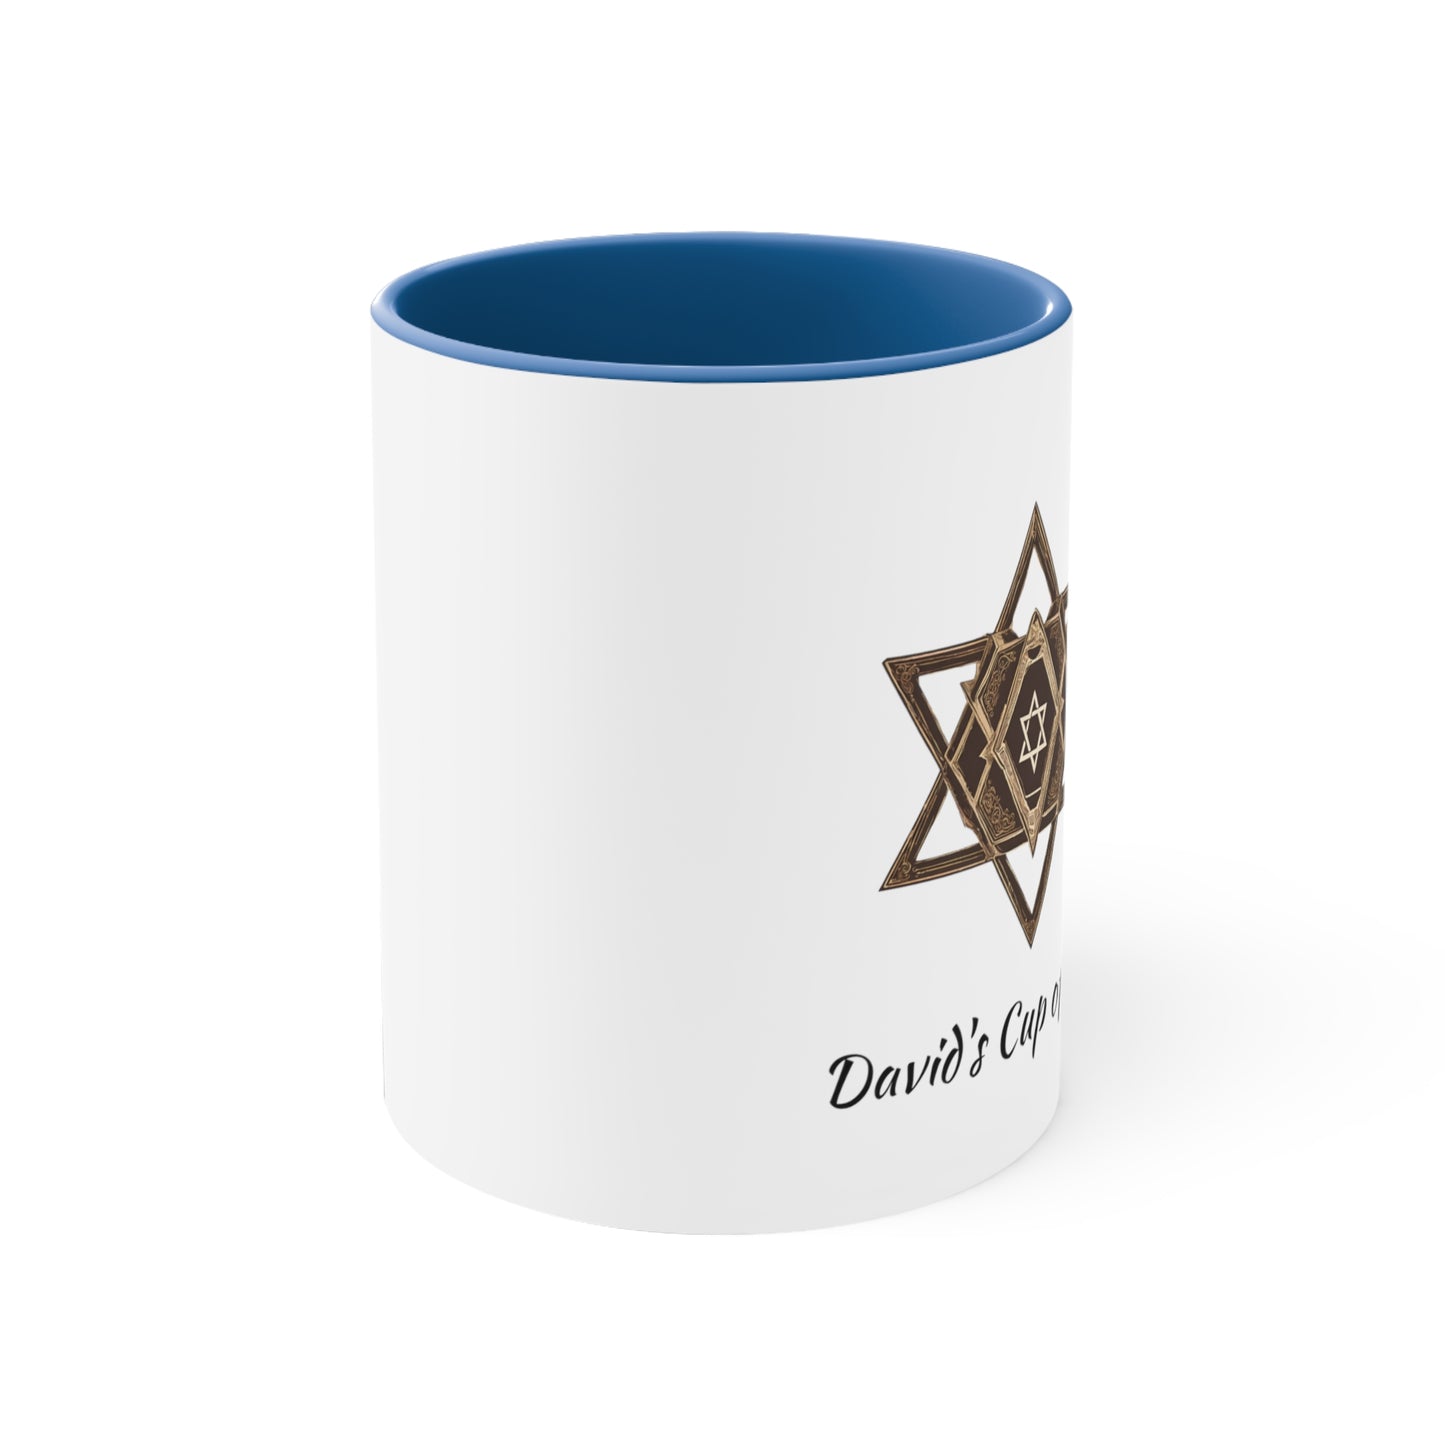 "David's cup of Wisdom" Coffee Mug, 11oz